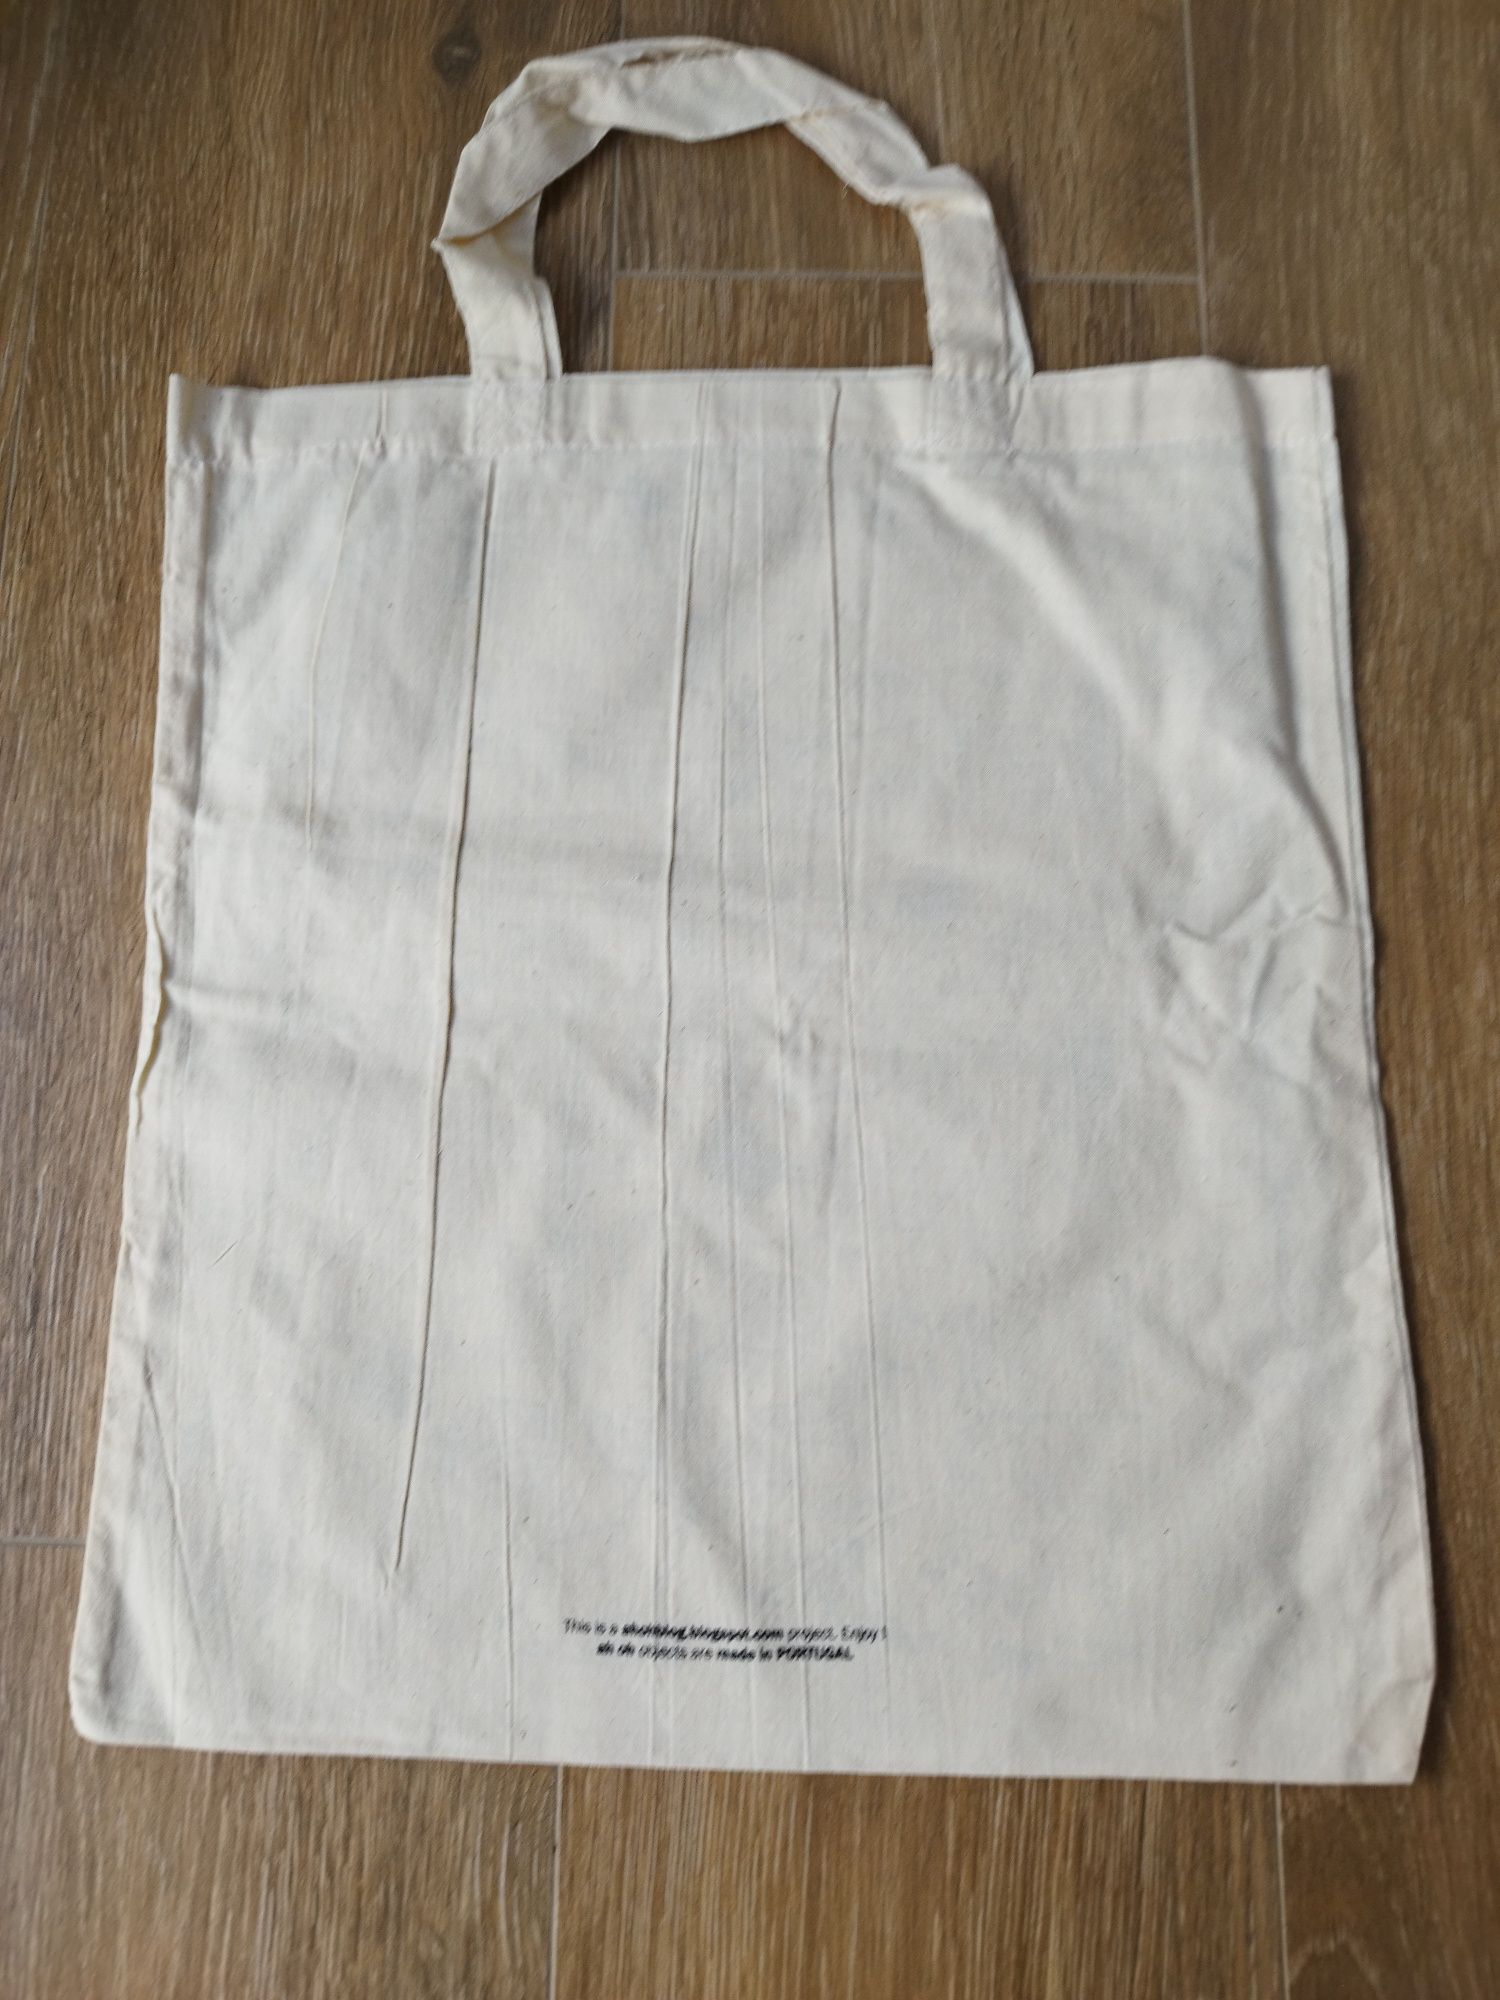 Tote bag / sacos de designers portugueses